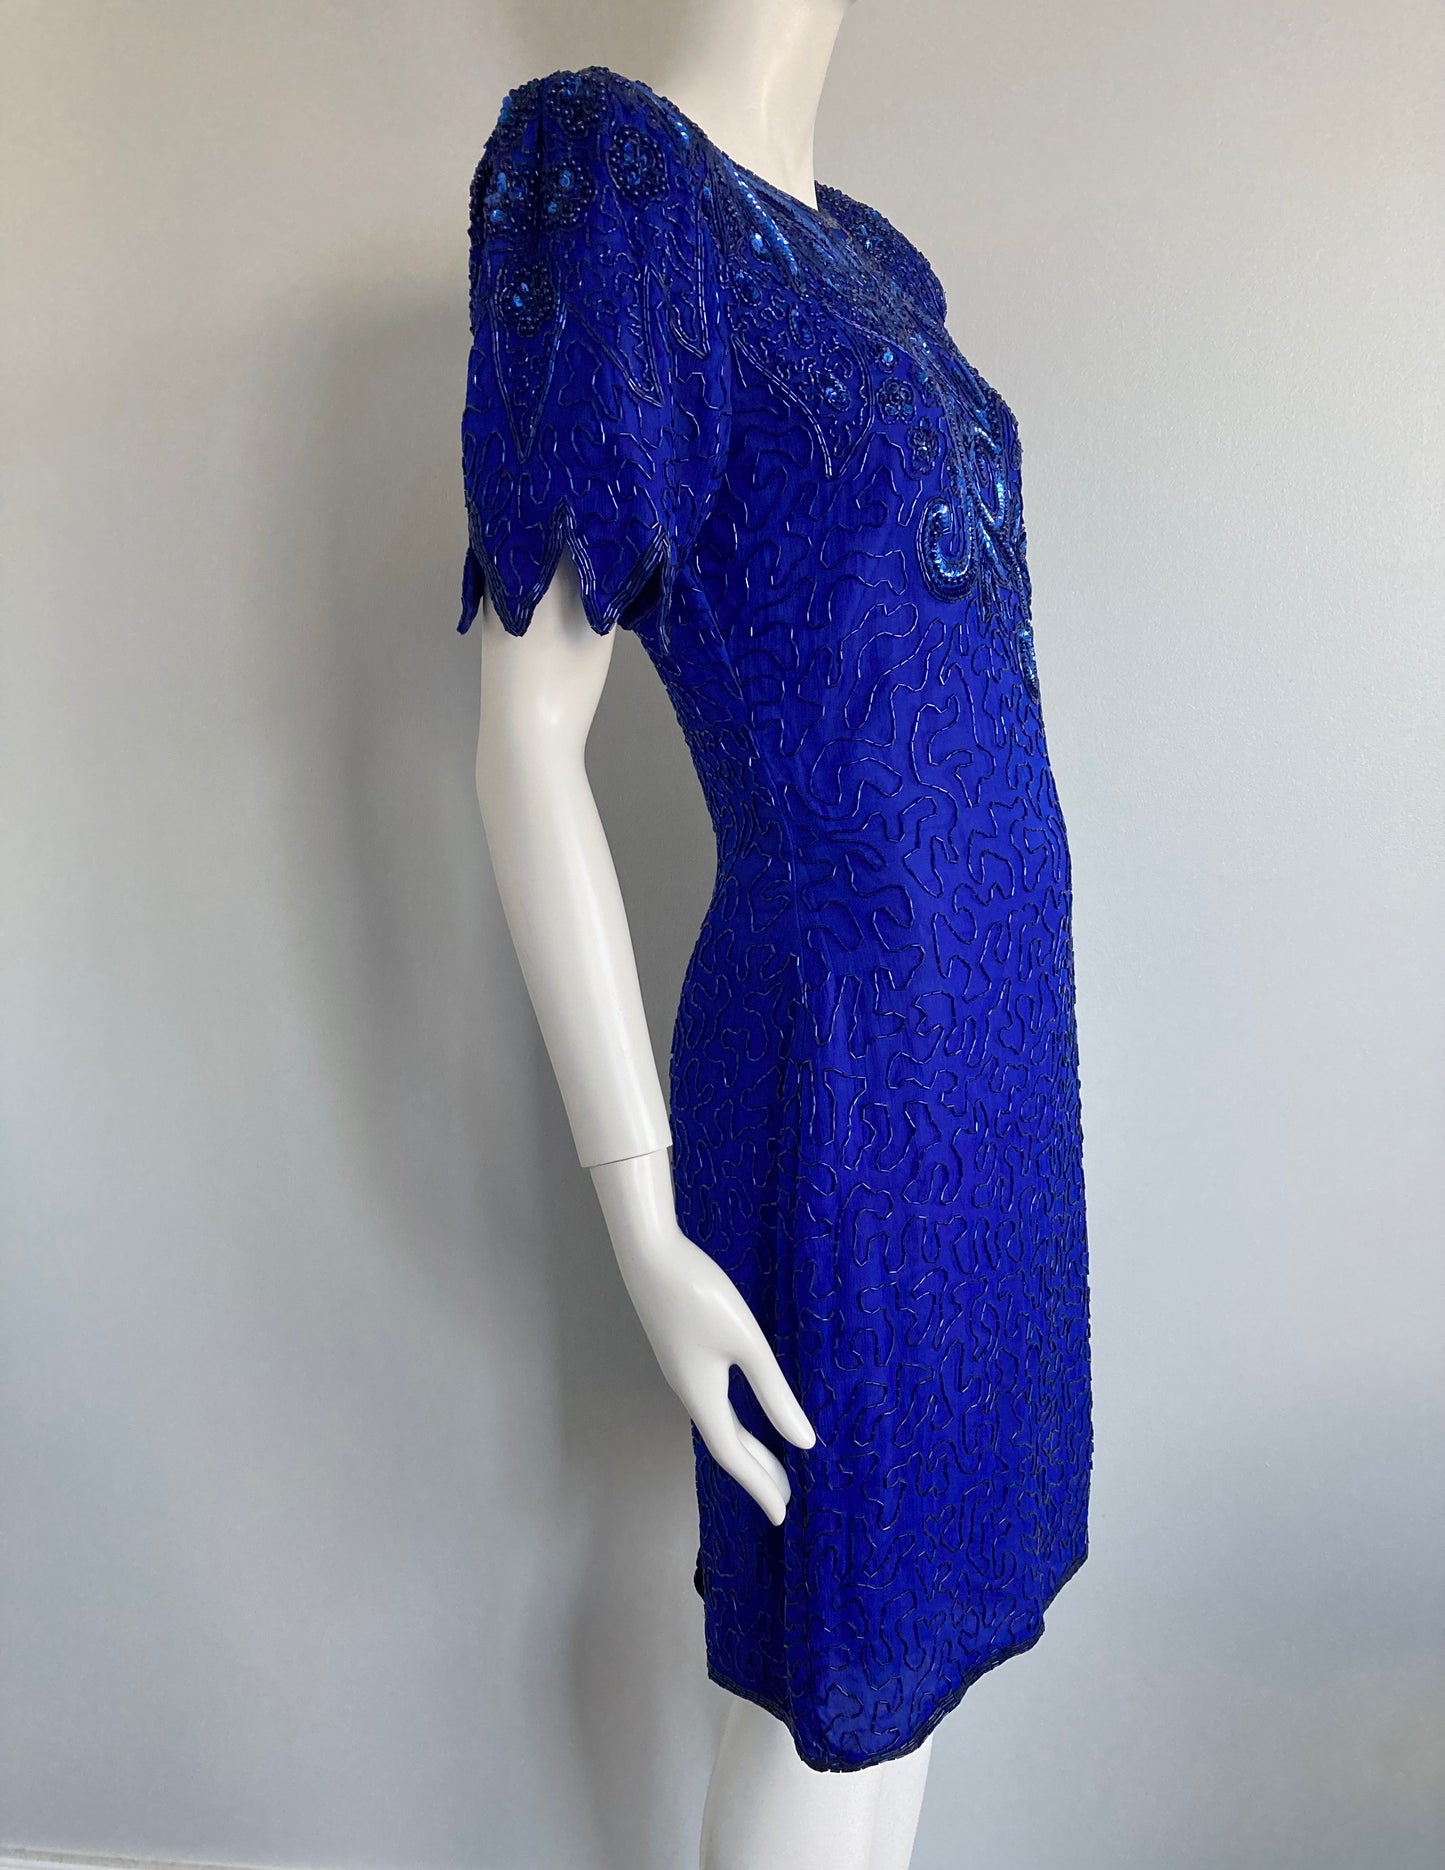 1980s Cobalt Blue Beaded Silk Dress, Size M, Beaded Party Dress